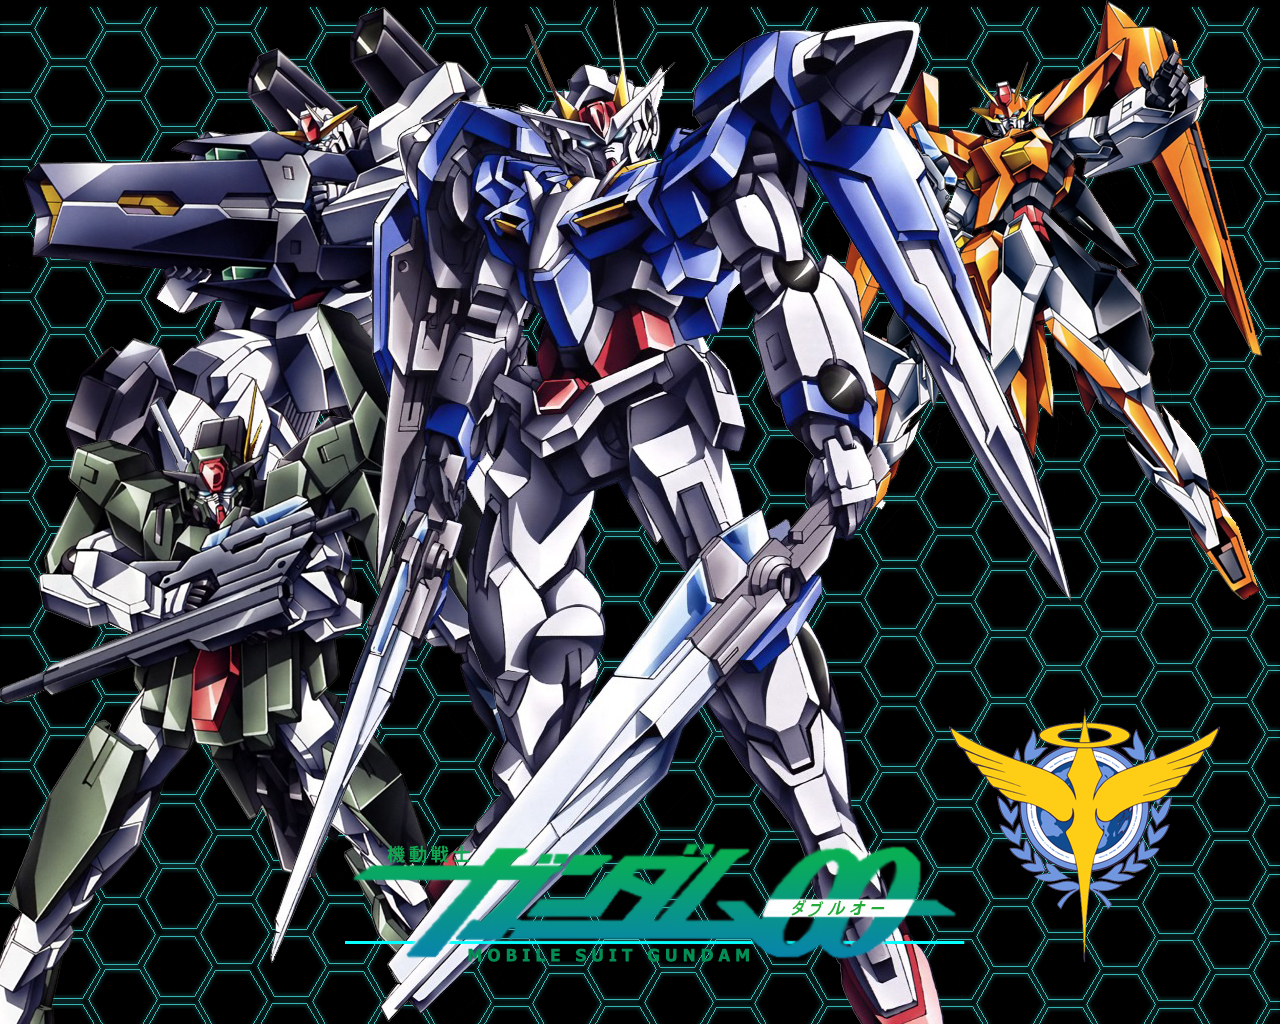 Mobile Suit Gundam Series 39 Widescreen Wallpaper Gundam 00 Wallpaper Iphone 1280x1024 Wallpaper Teahub Io